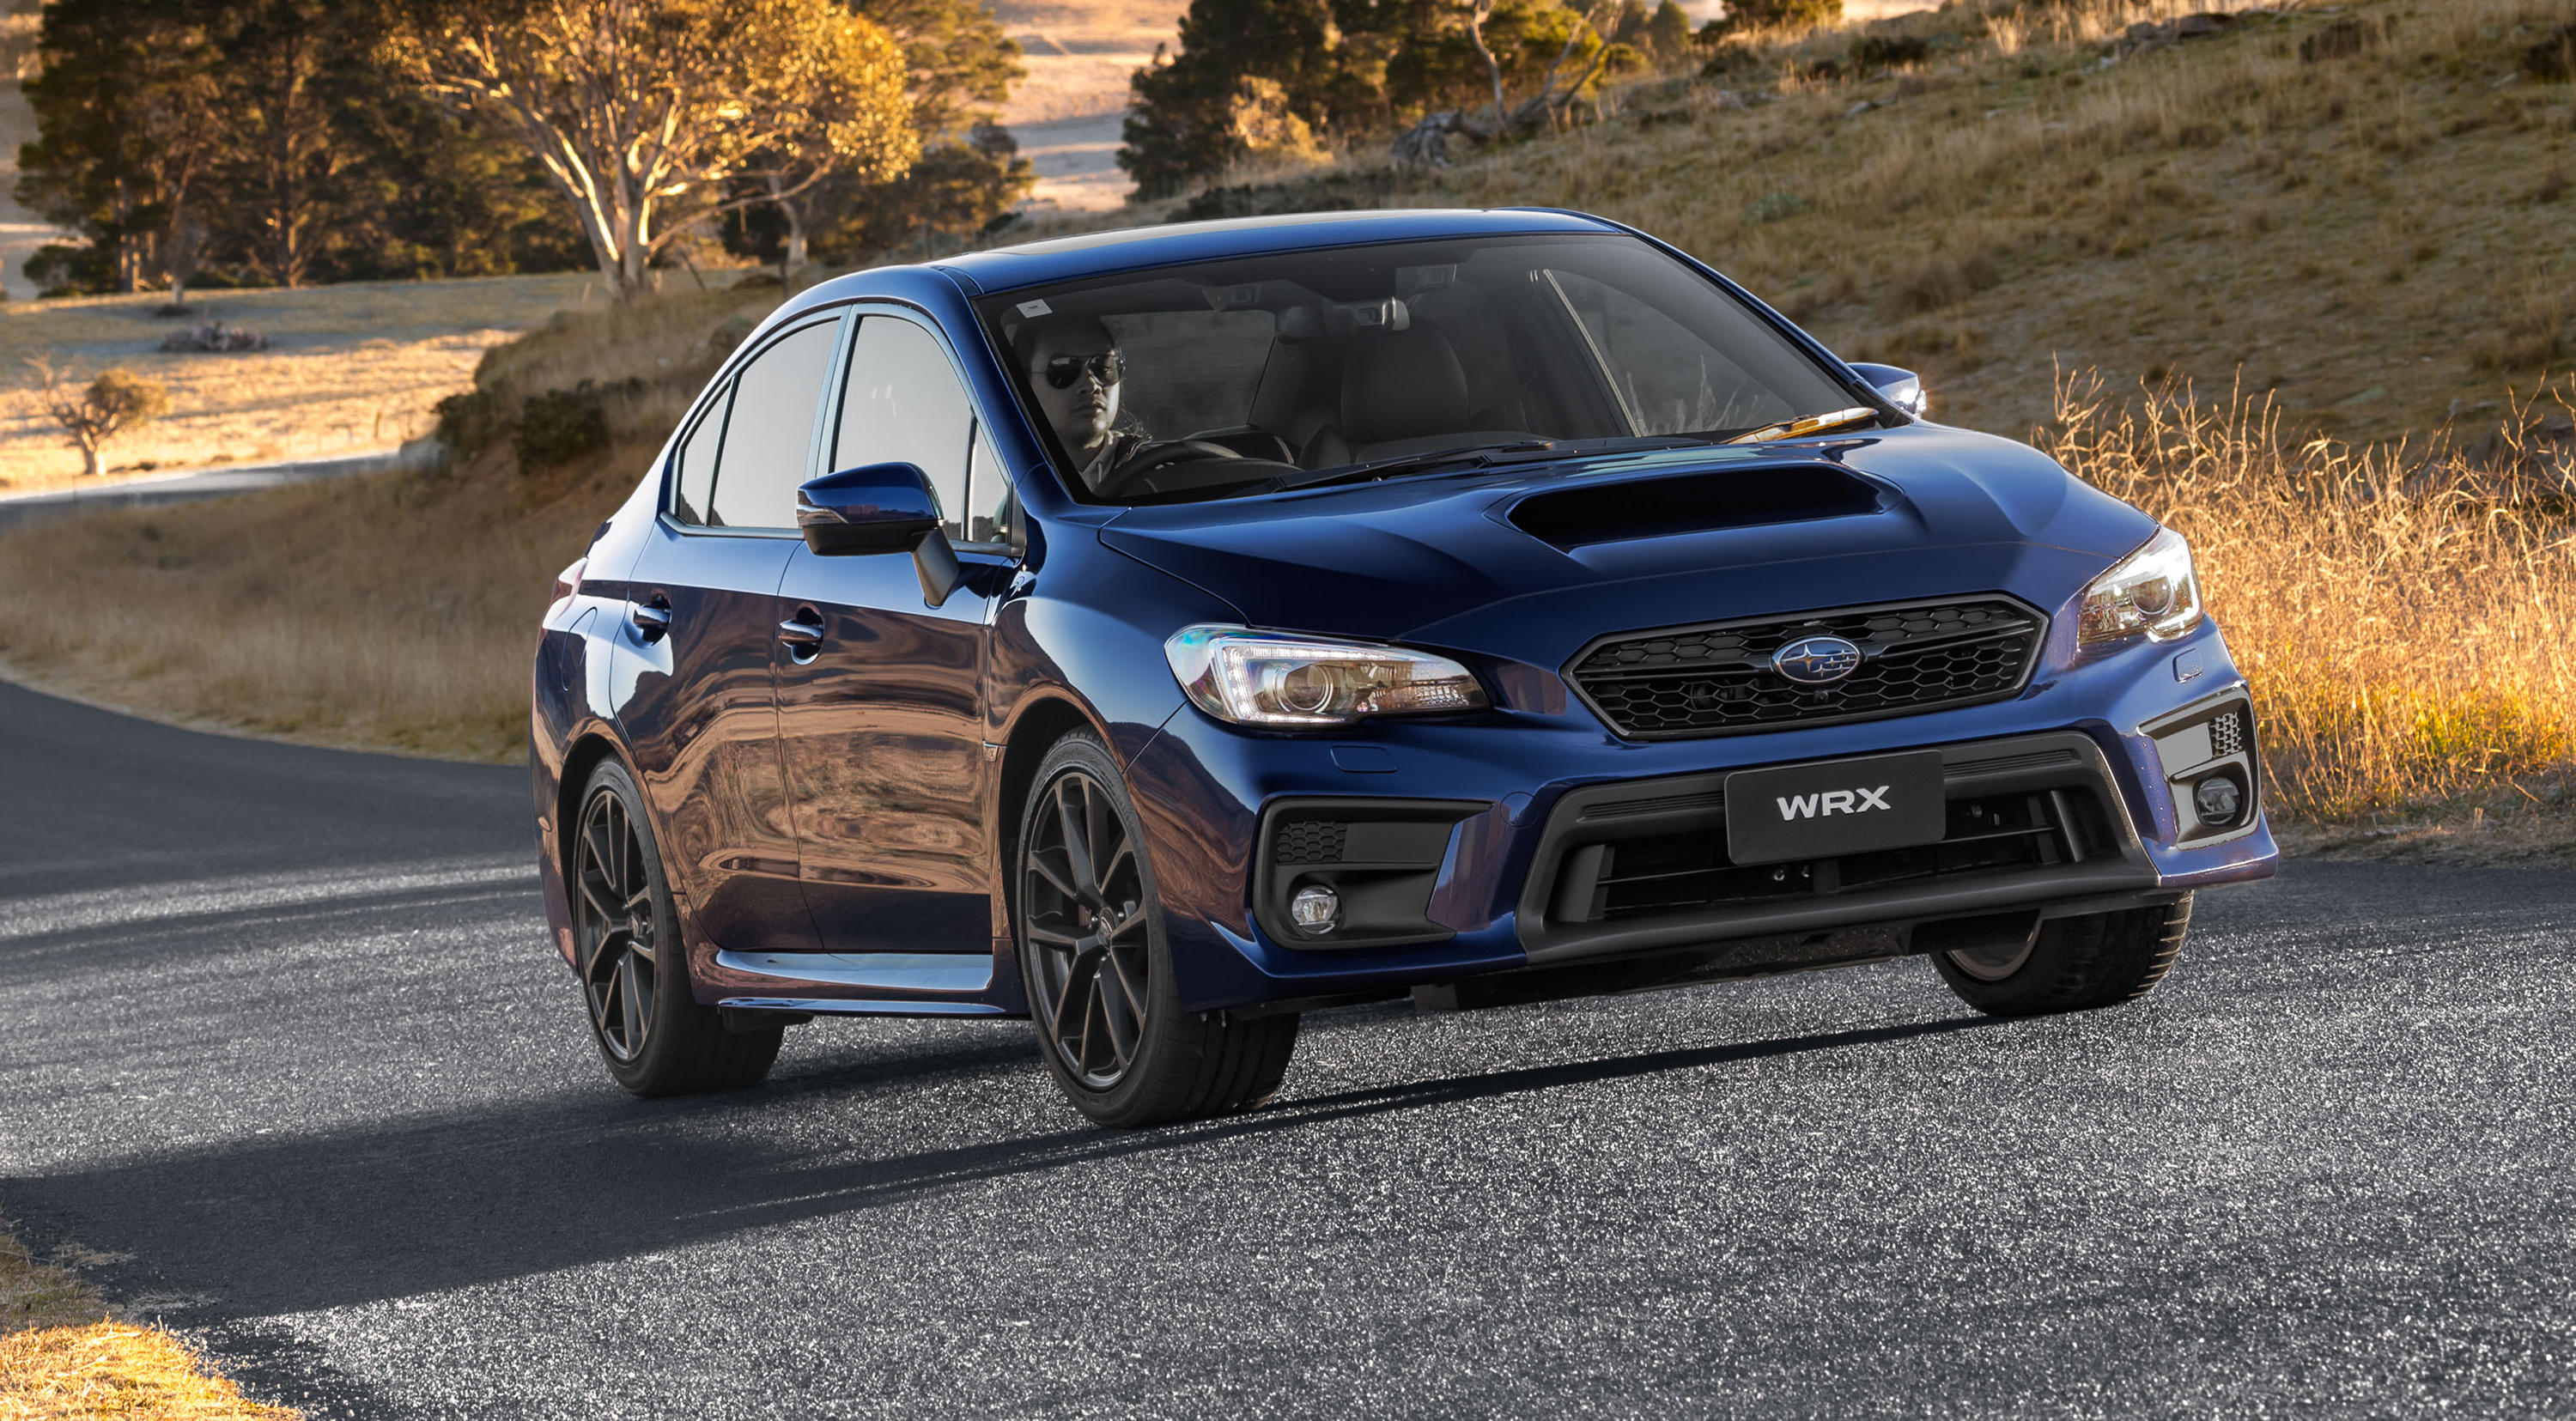 2018 Subaru WRX, WRX STI pricing and specs Tweaked looks